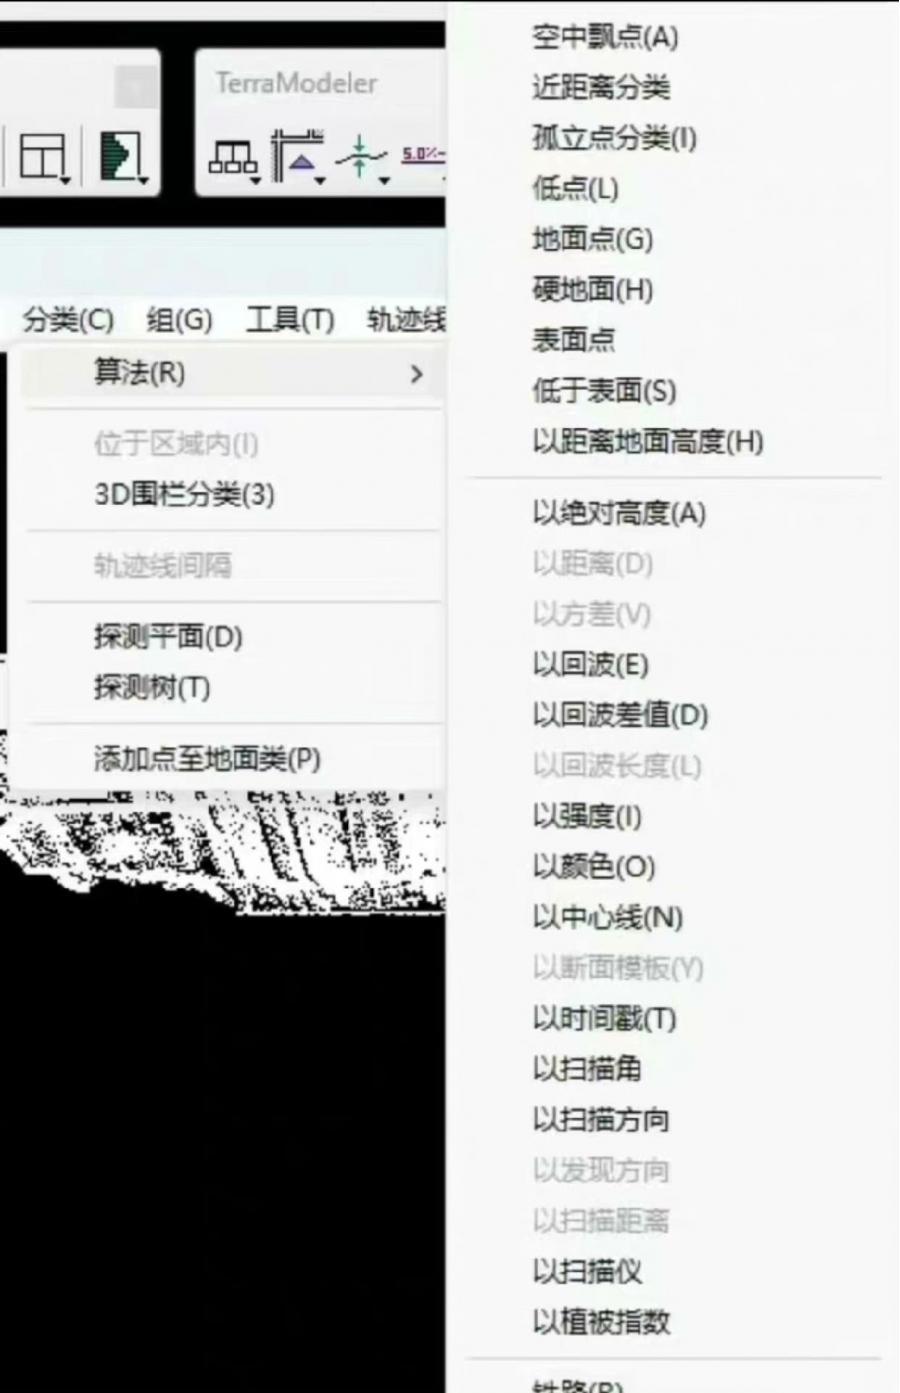 TerraSolid V21中文版 无限电脑安装

tscan、tmodeler、tphoto、tma